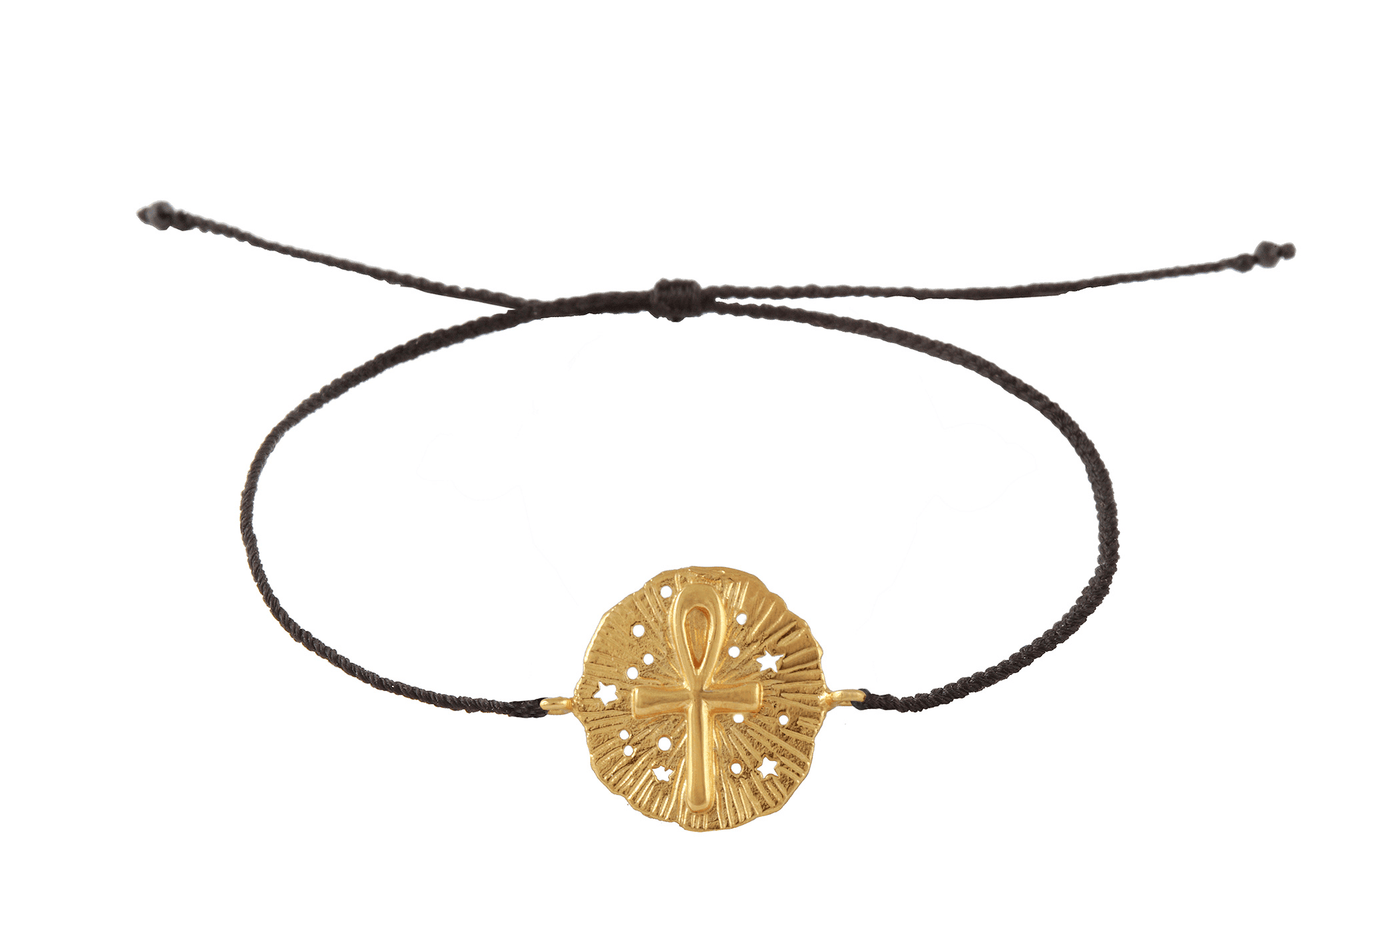 String bracelet with Ankh medallion amulet. Gold plated